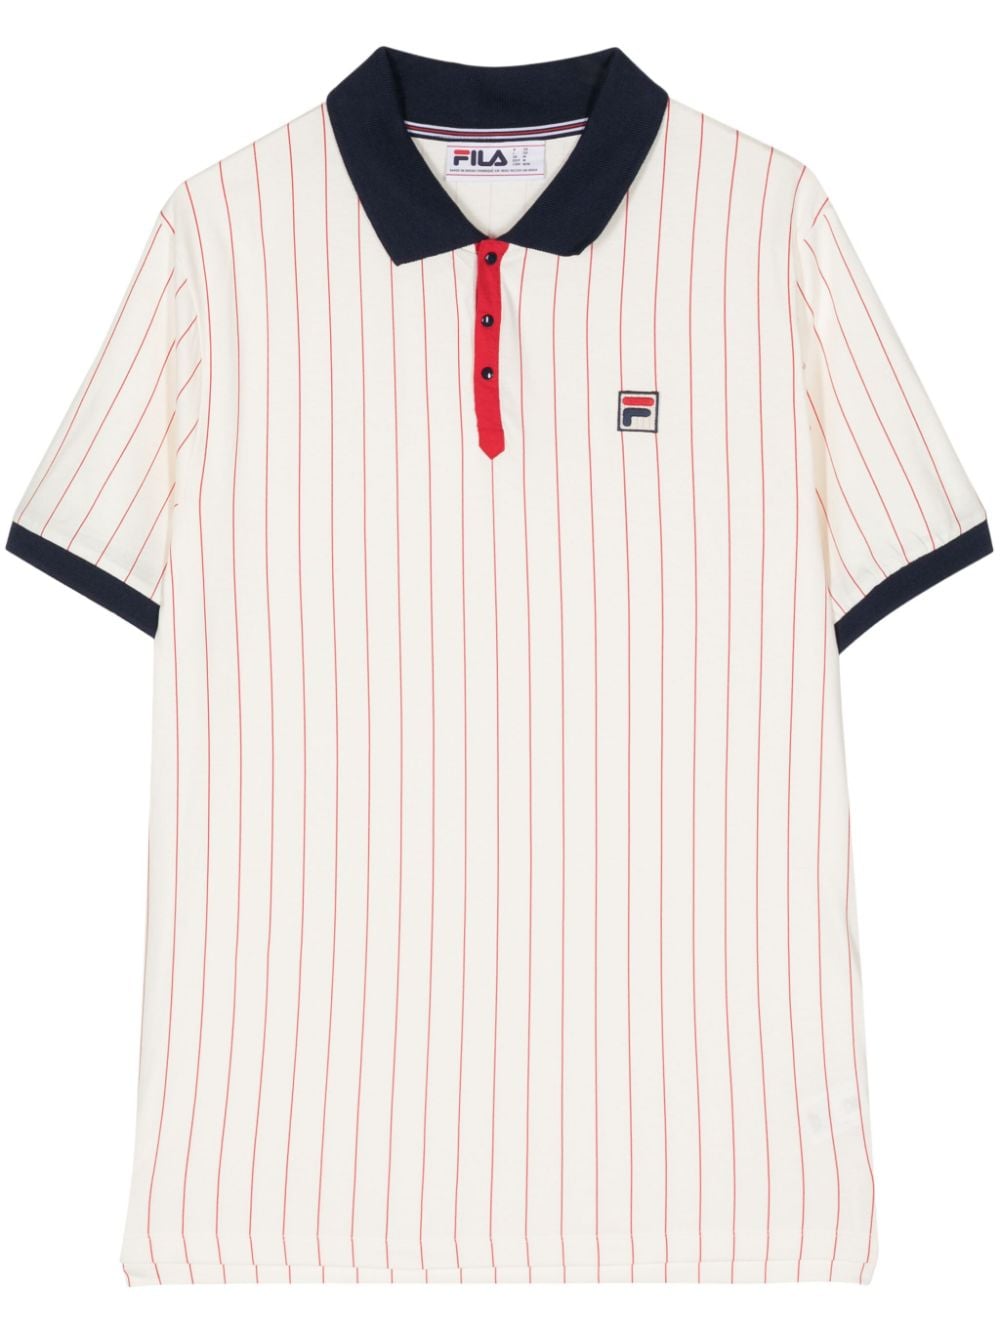 Fila striped cotton polo shirt - Toni neutri